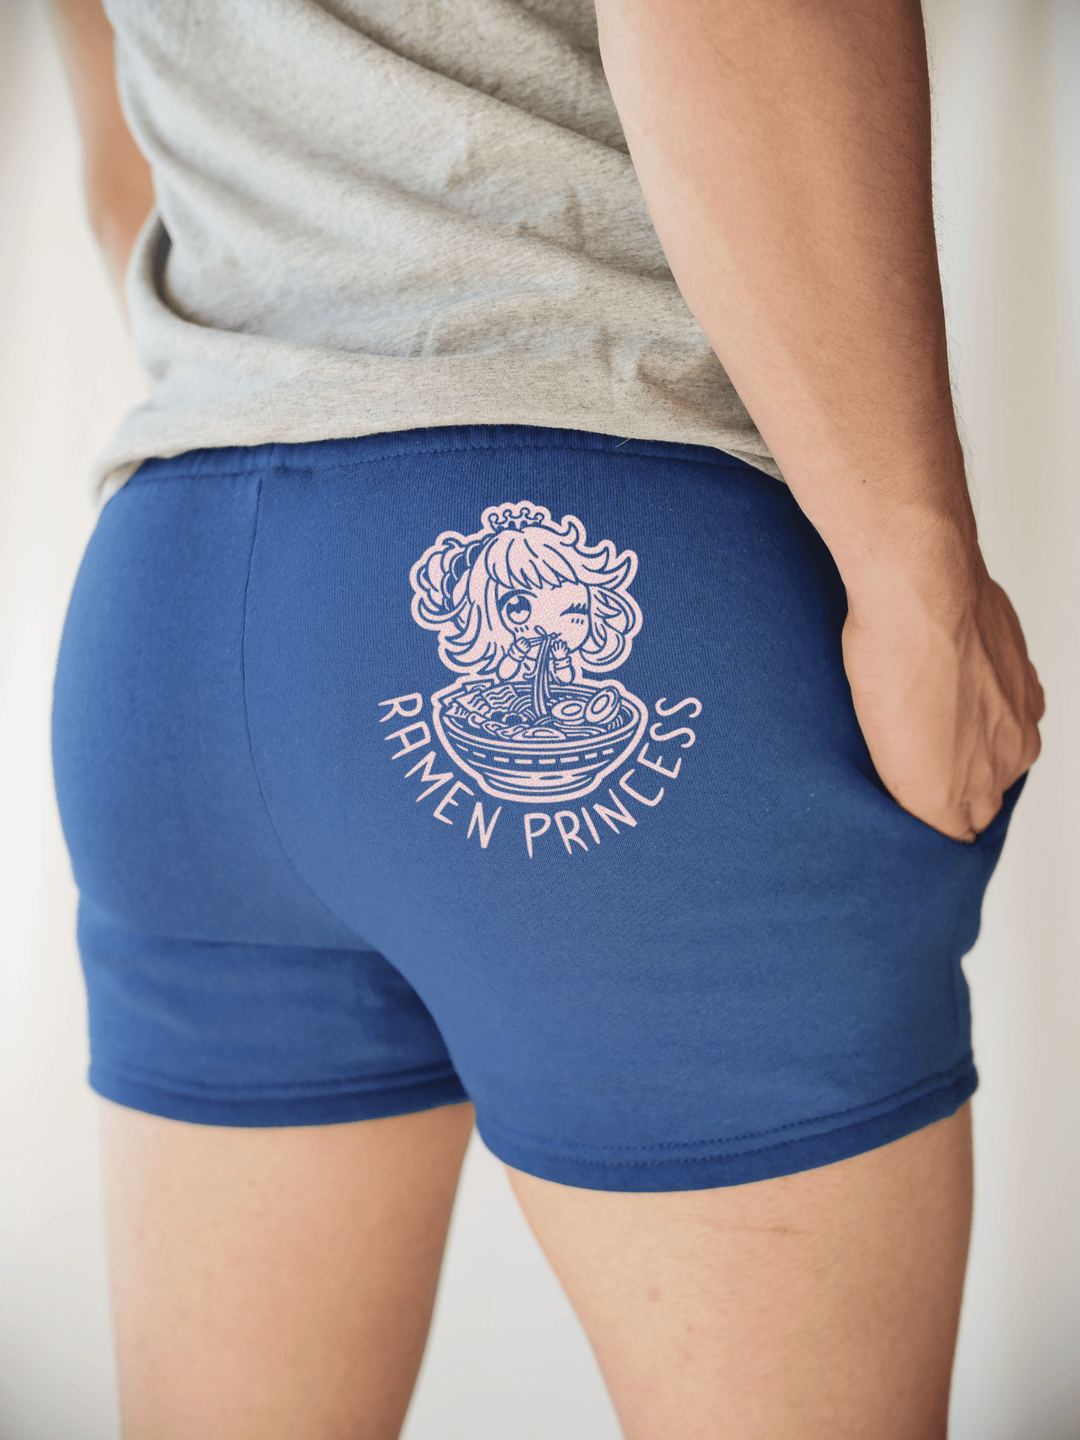 PixelThat Punderwear Shorts Royal Blue / S / Back Ramen Princess Men's Gym Shorts